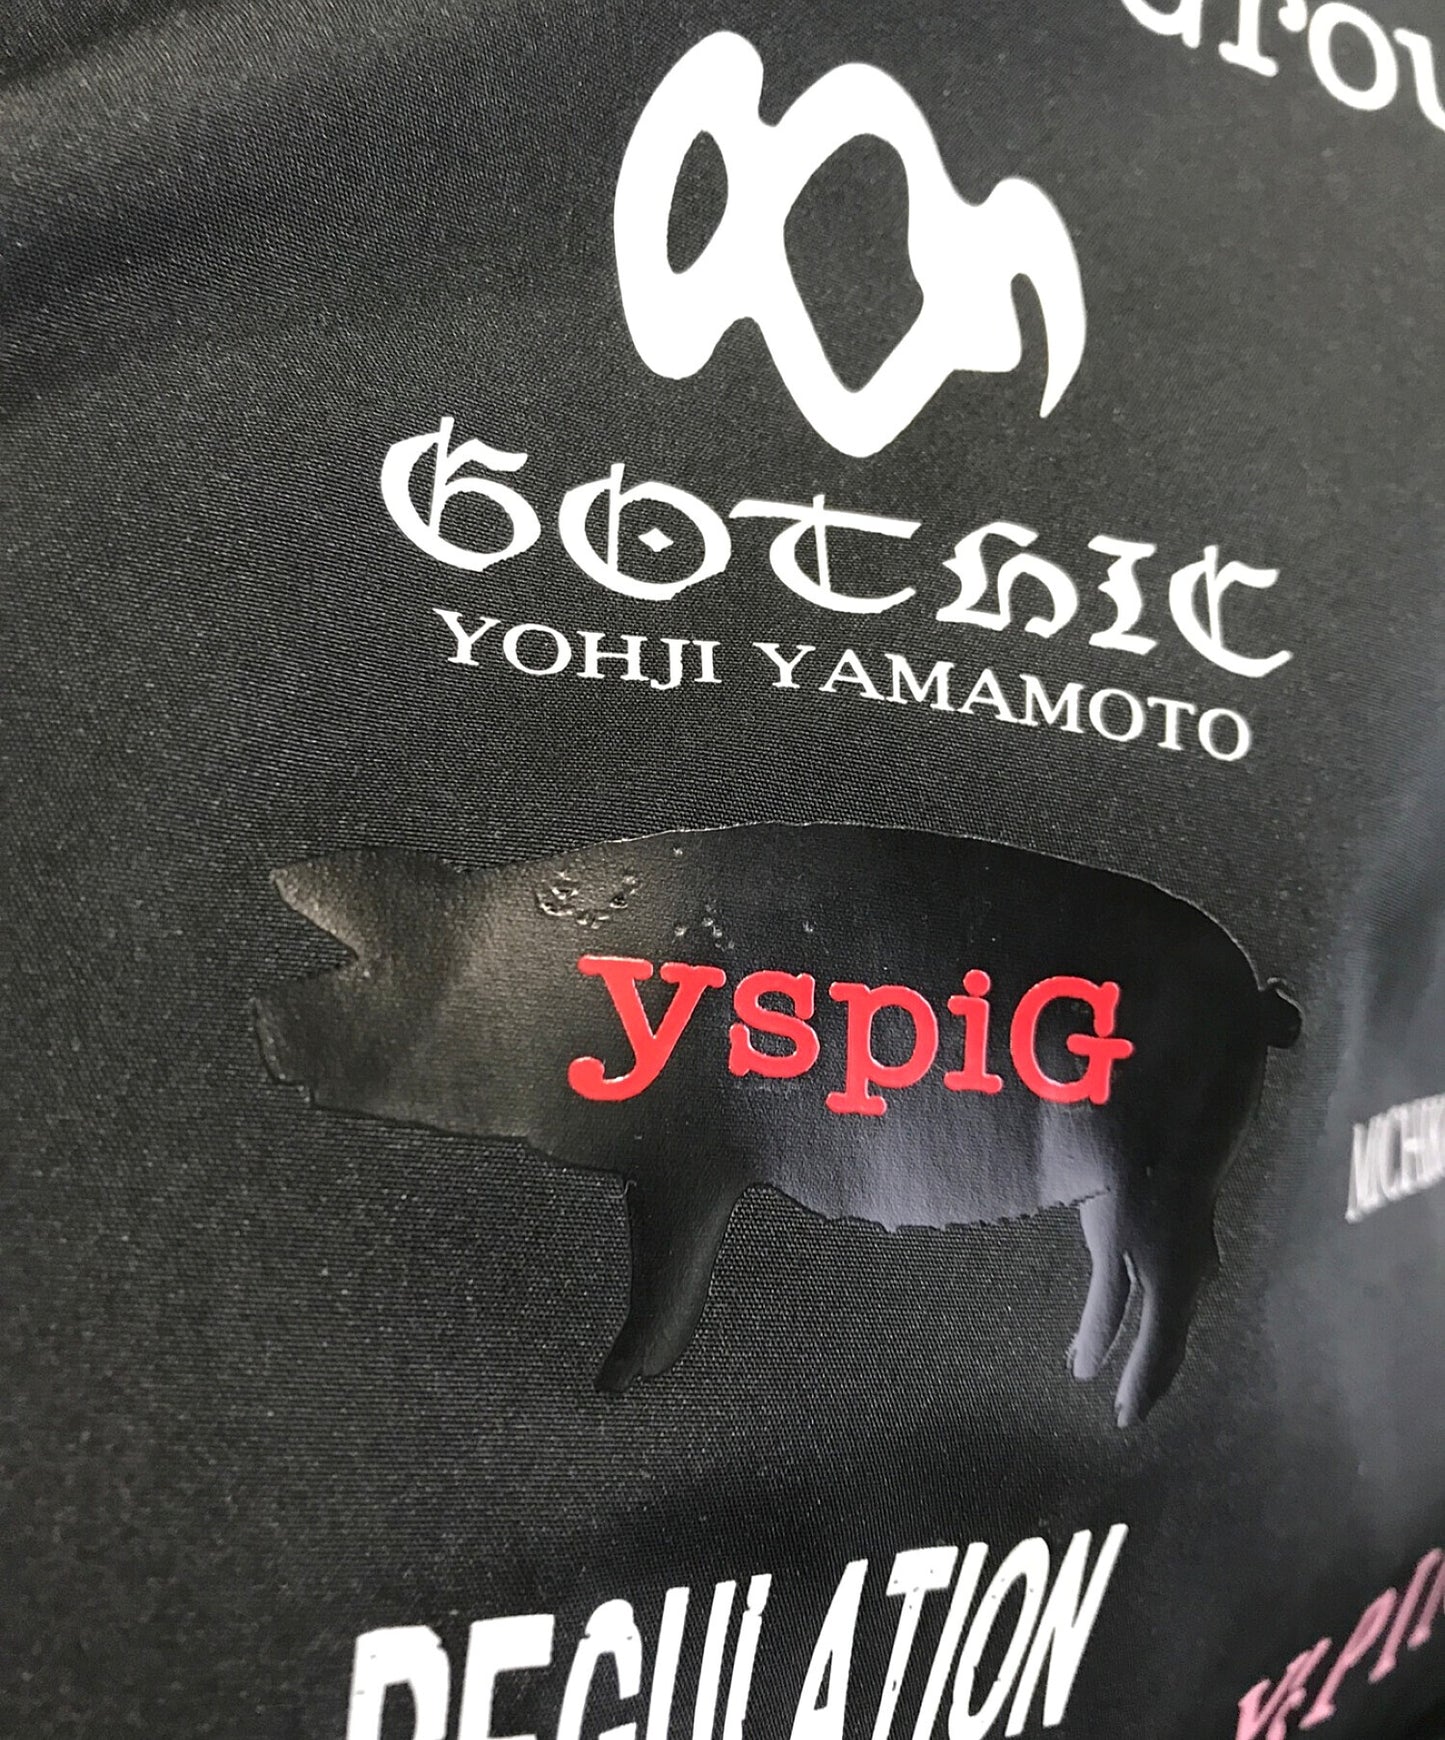 Yohji Yamamoto x New Era Corporate Coach Jacket HD-Y50-900